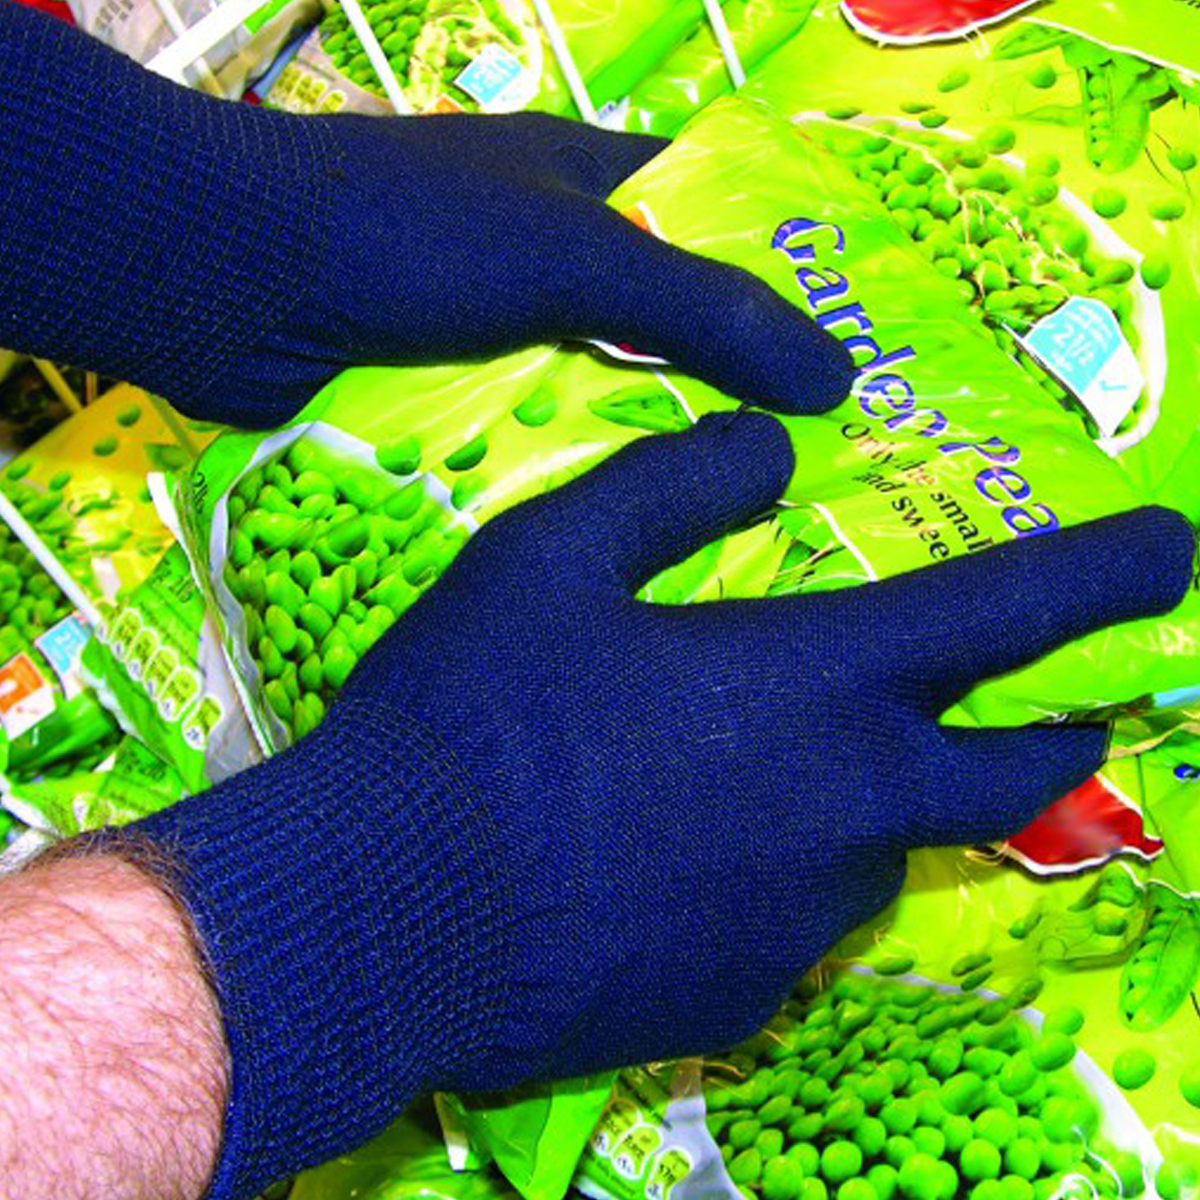 guantes para tratar congelados